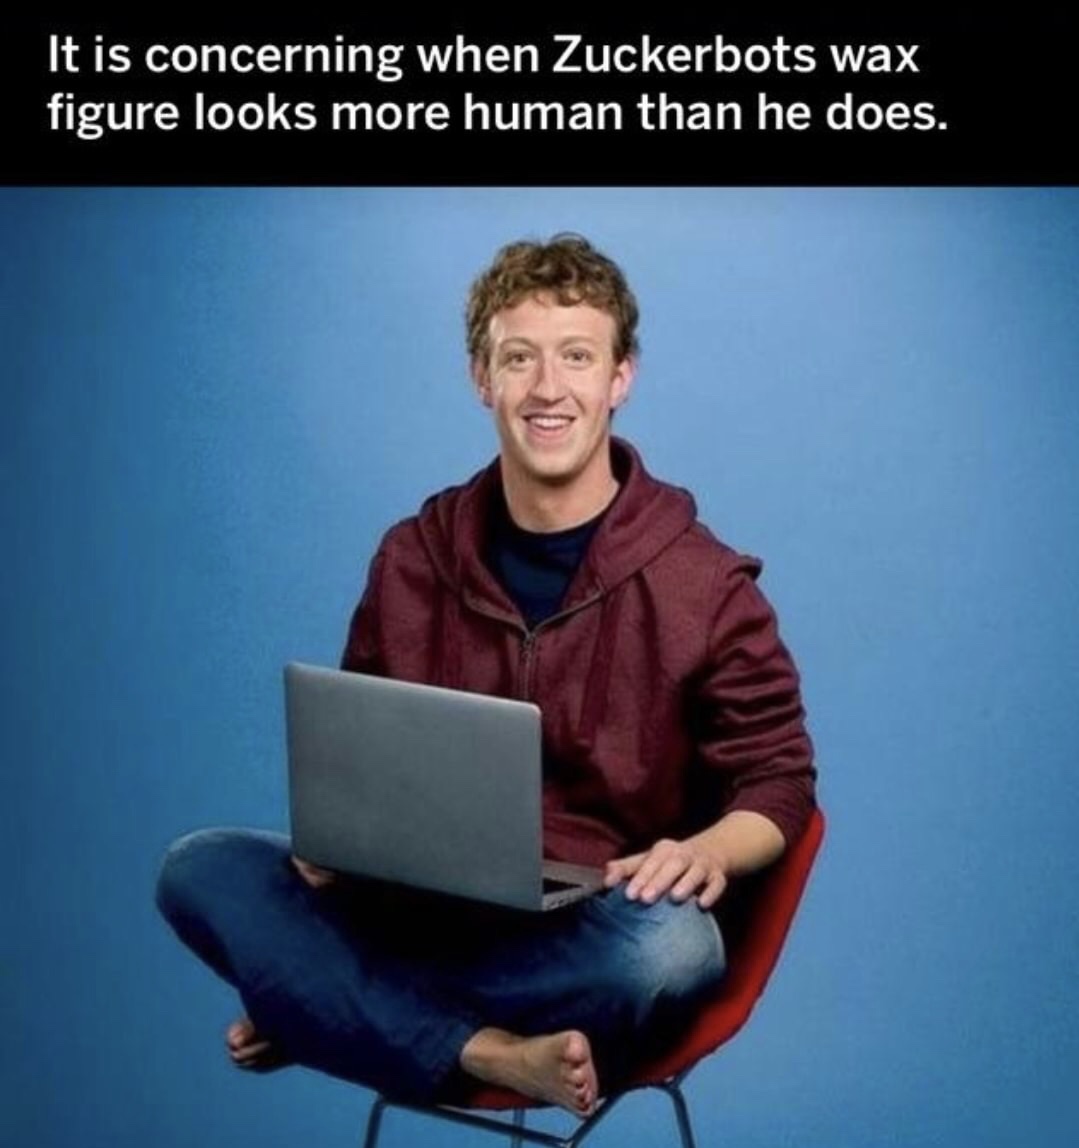 mark zuckerberg wax figure meme - It is concerning when Zuckerbots wax figure looks more human than he does.